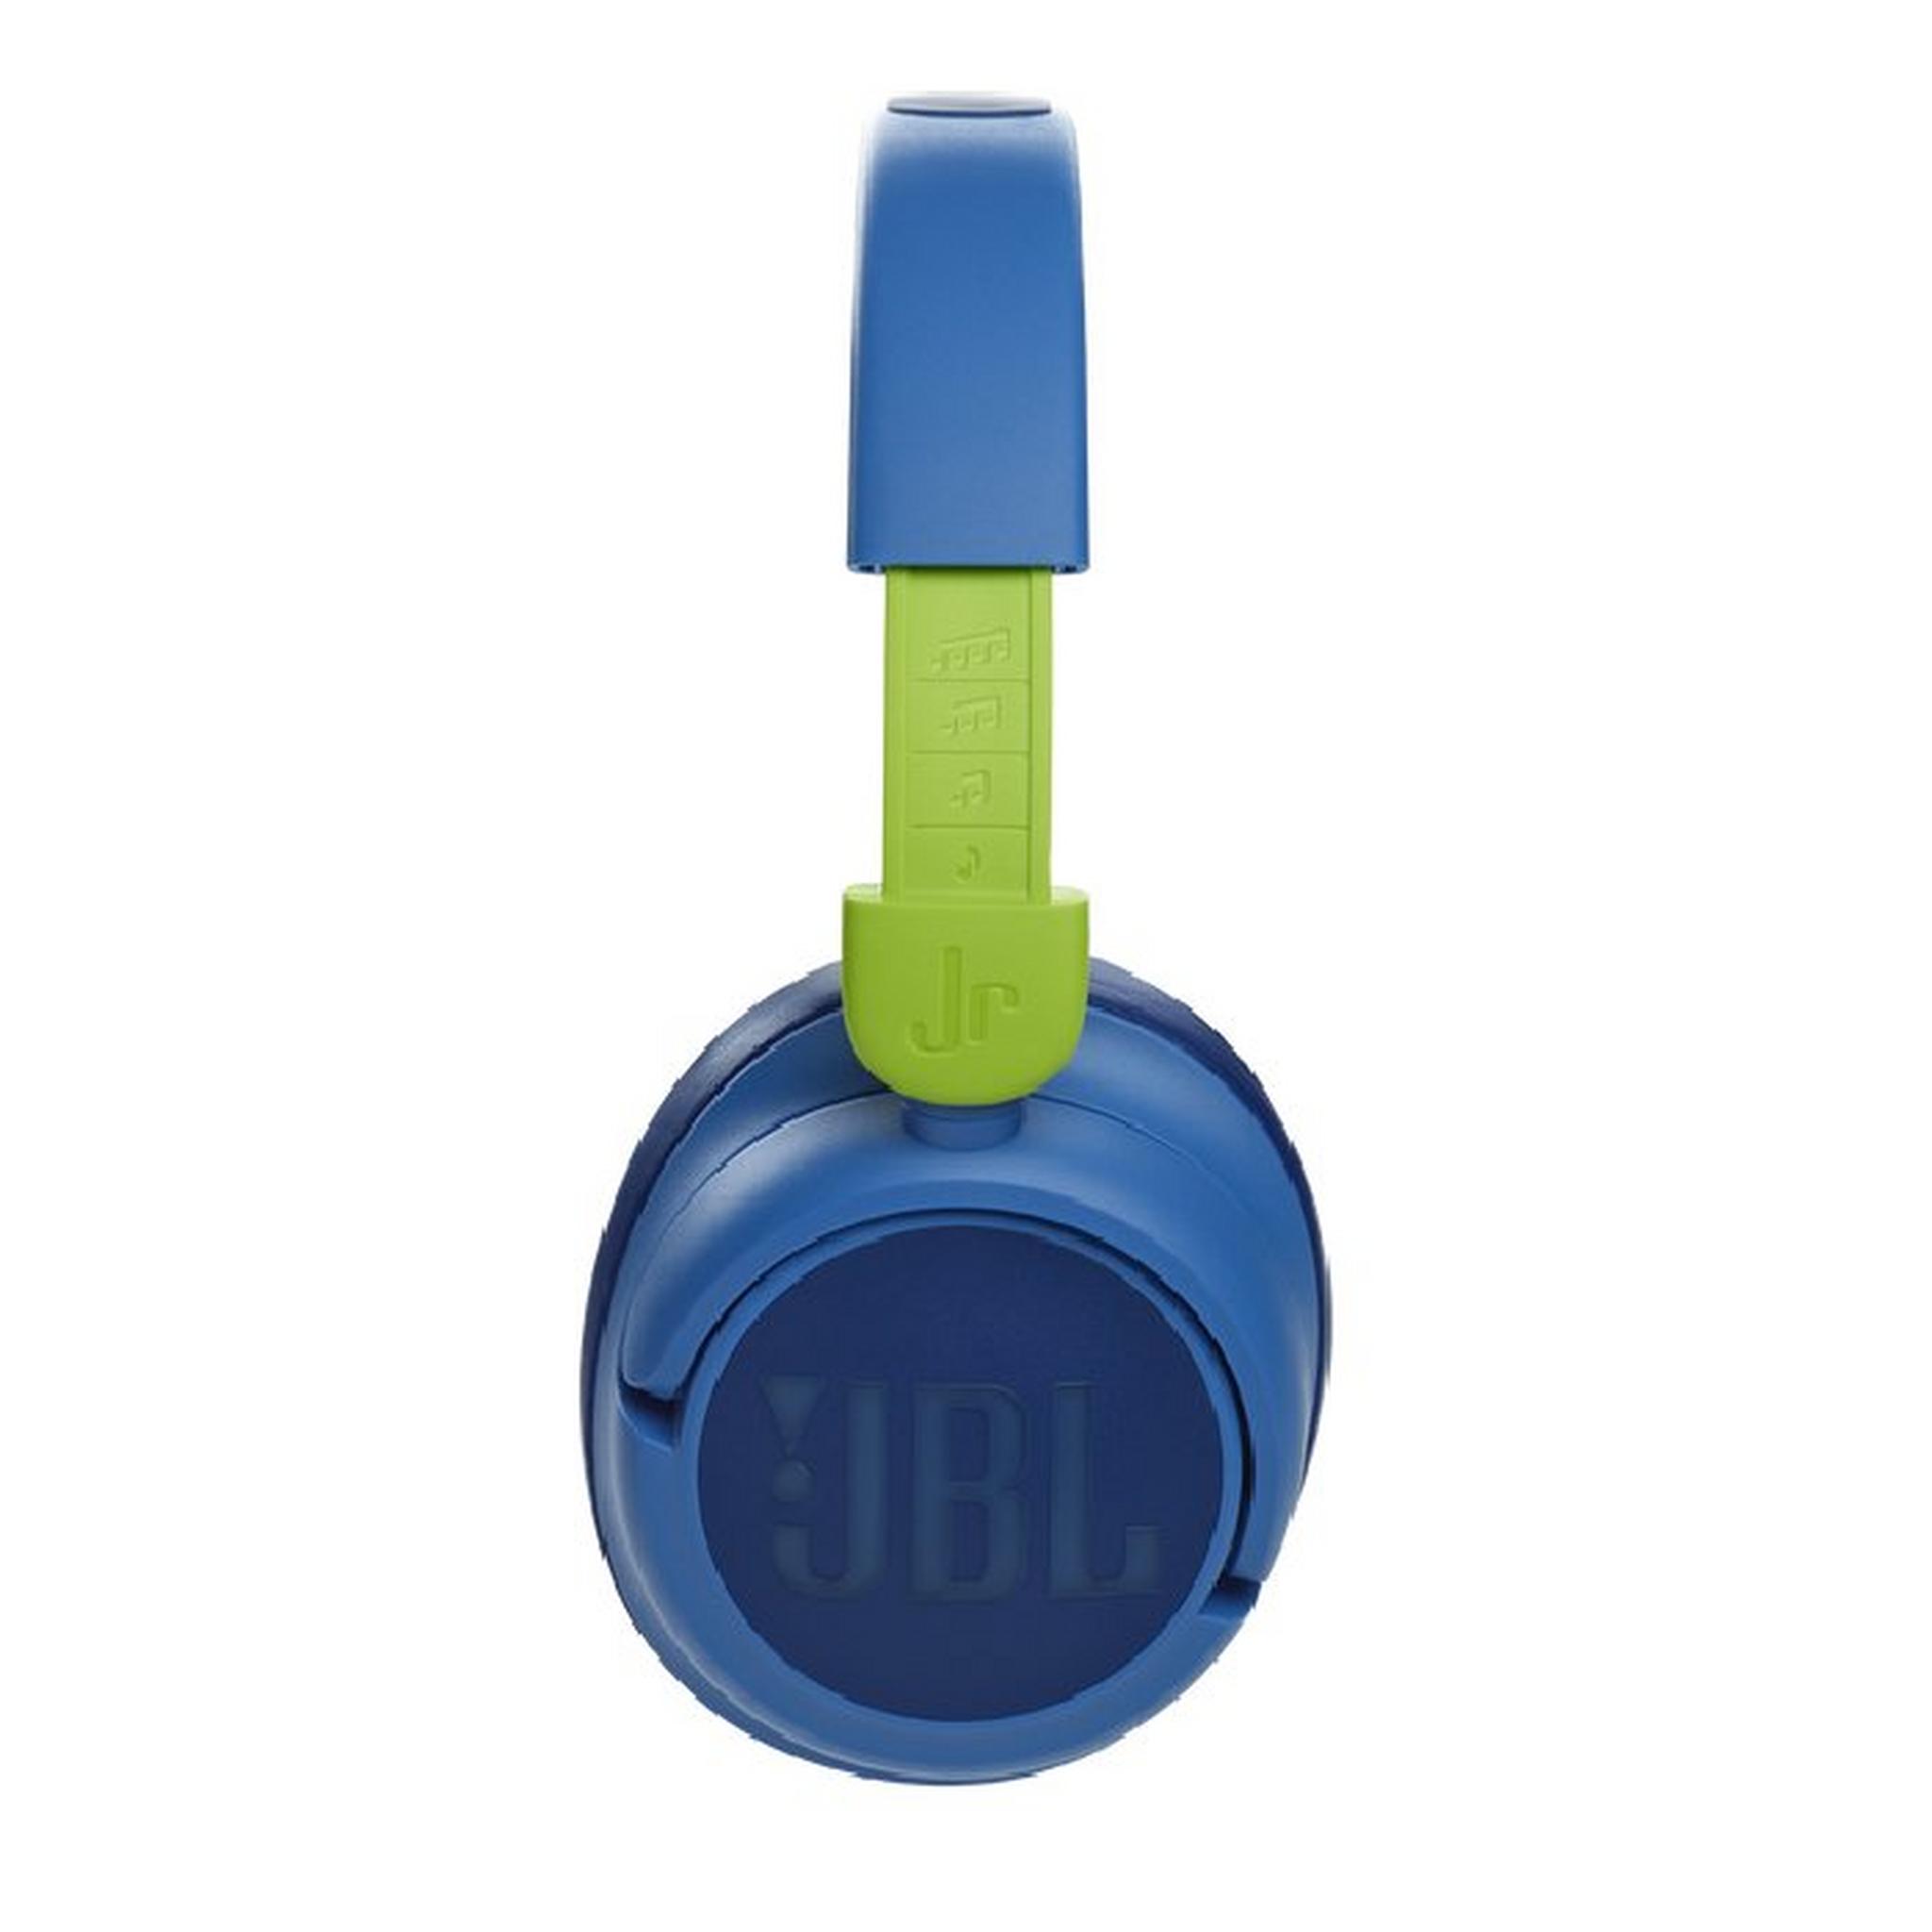 JBL Wireless Over the Ear Kids Headphones, JR460NC - Blue